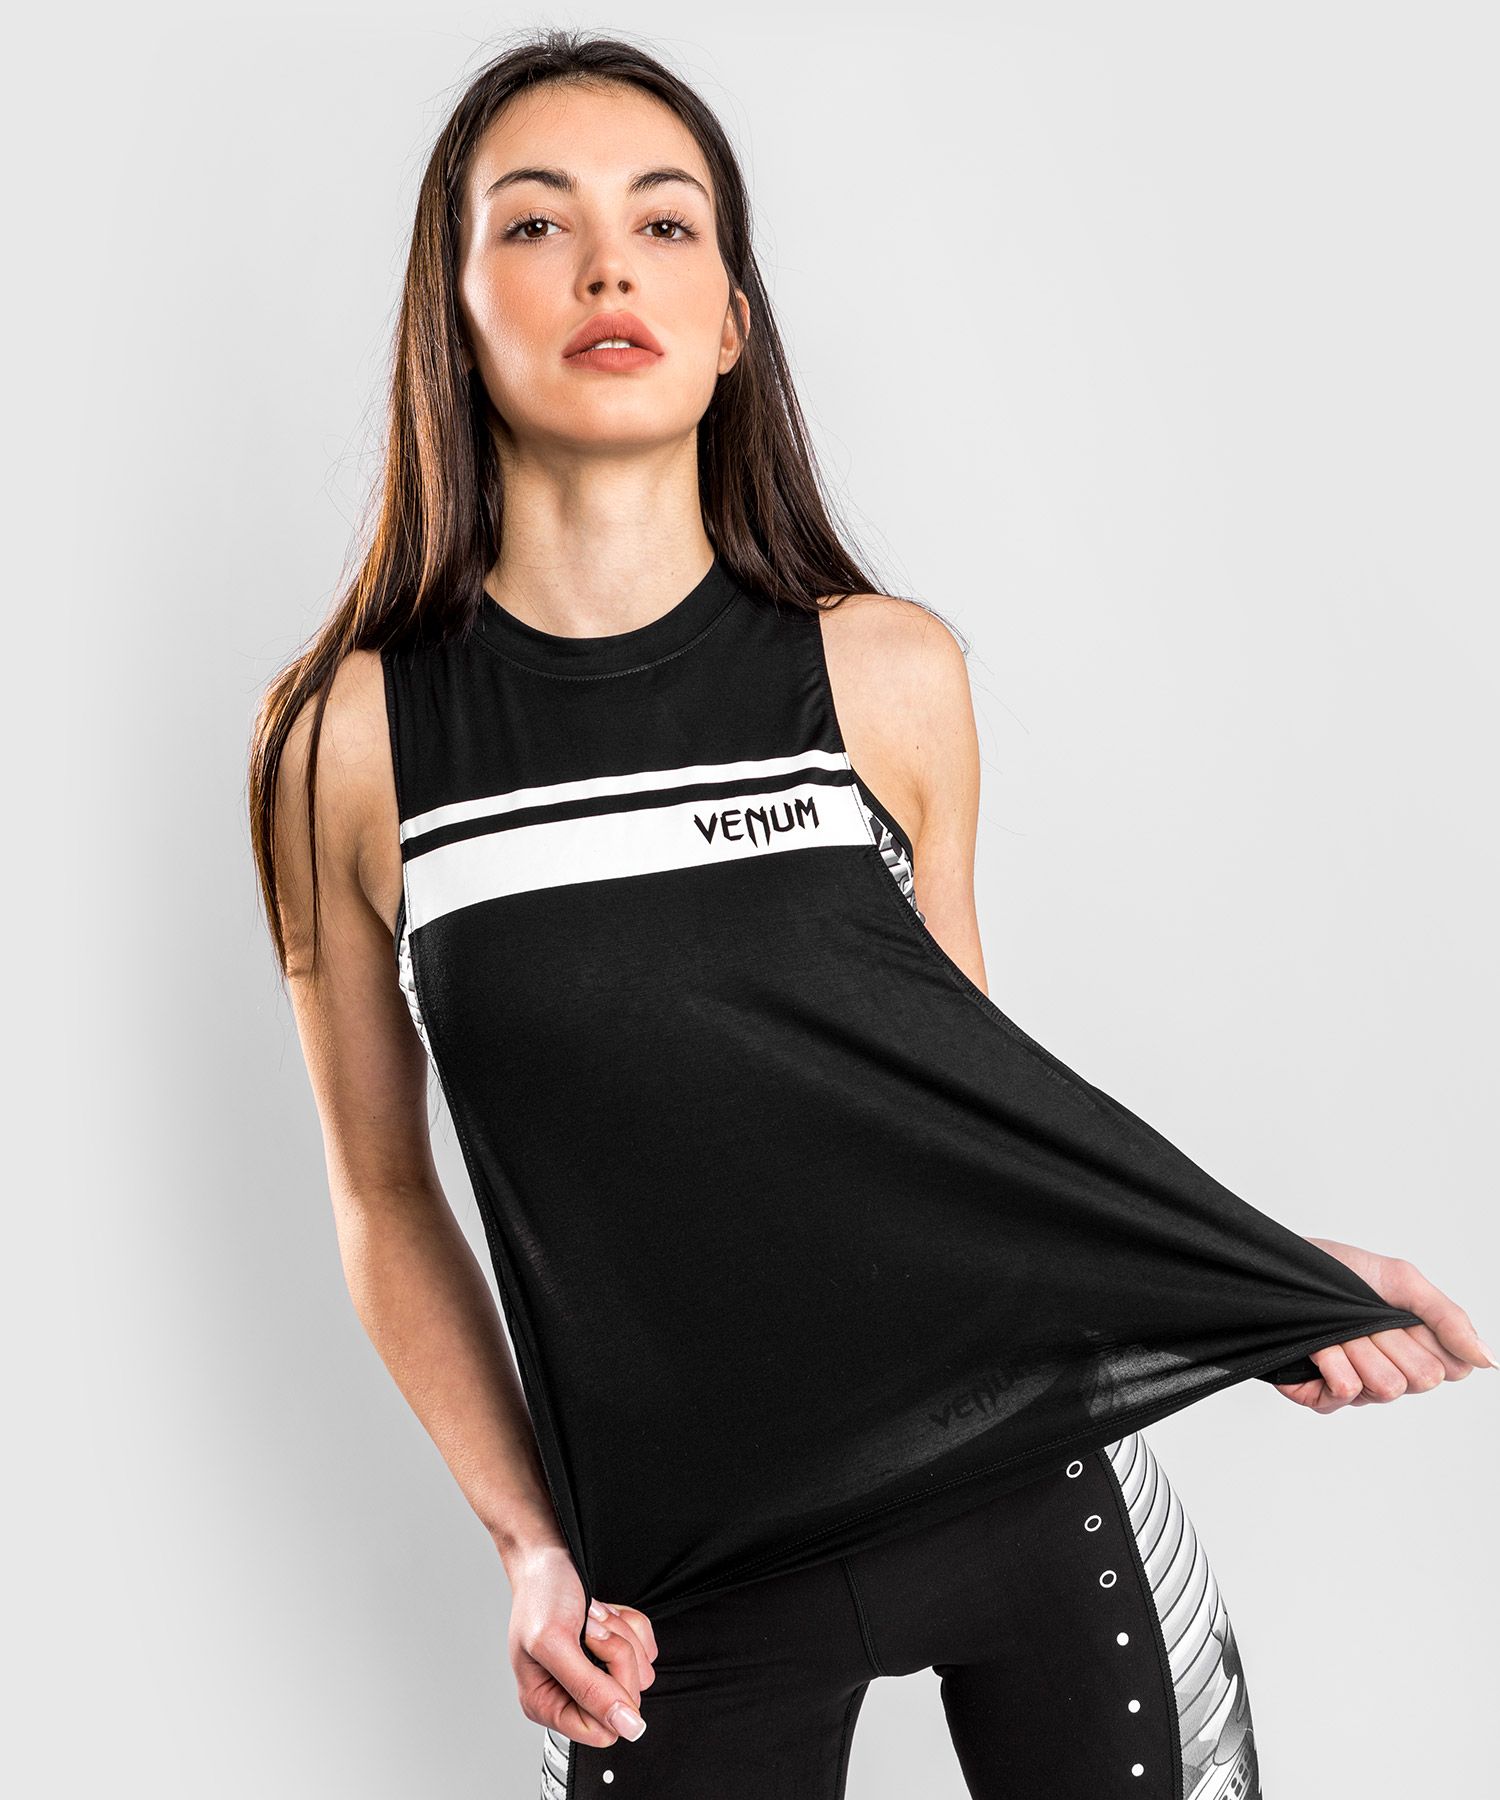 Venum YKZ21 Women’s Tank Top – Black/White